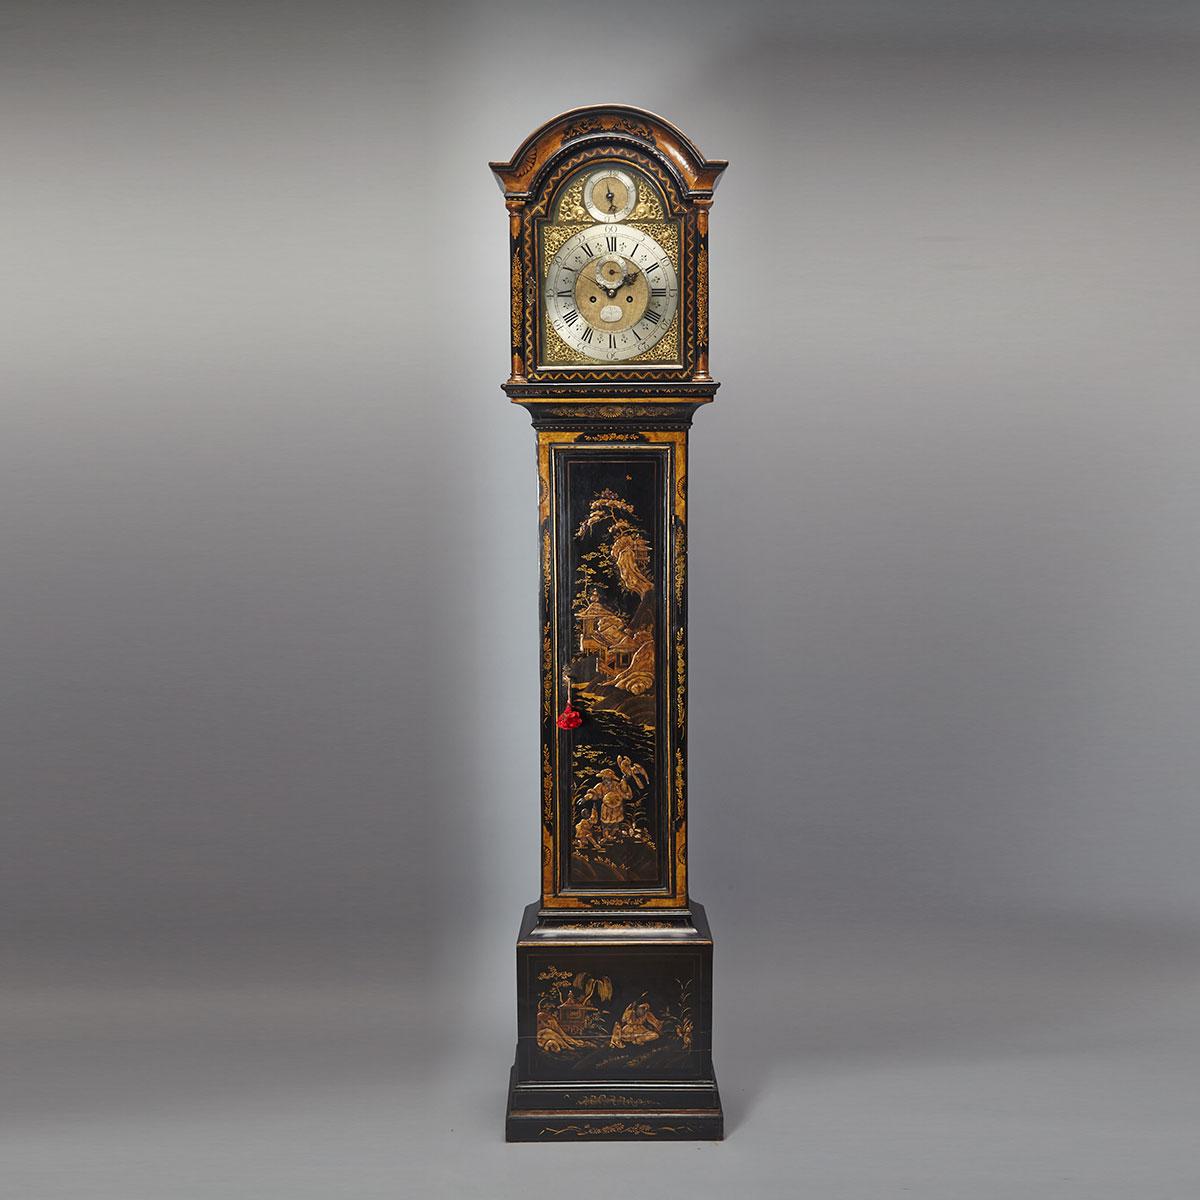 George III Black Japanned Tall Case clock, hewes carter, Cambridge, c.1790